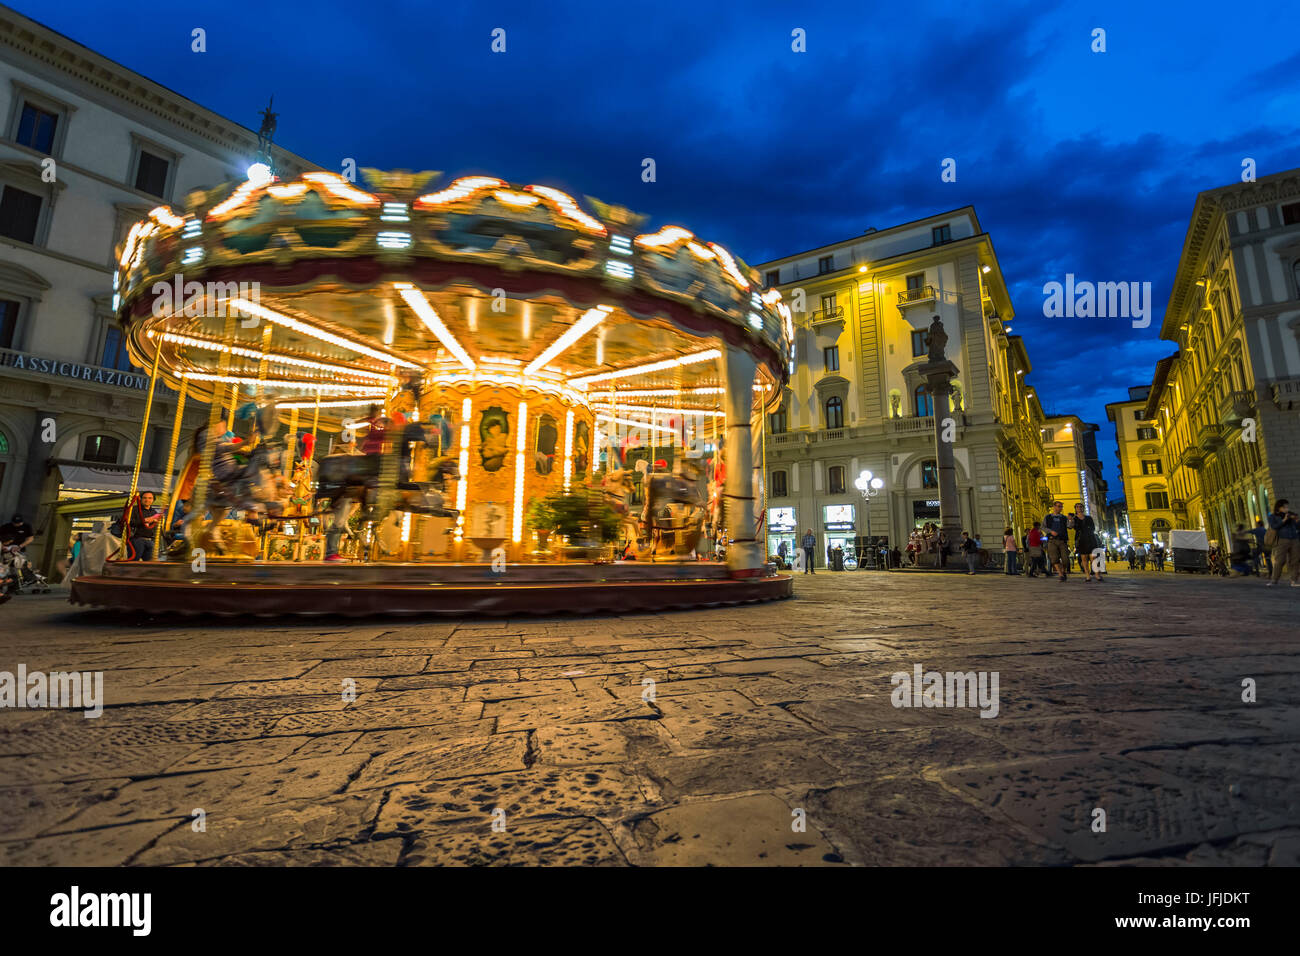 The historical carousel in Piazza della Repubblica, Florence, Tuscany, Italy, Stock Photo